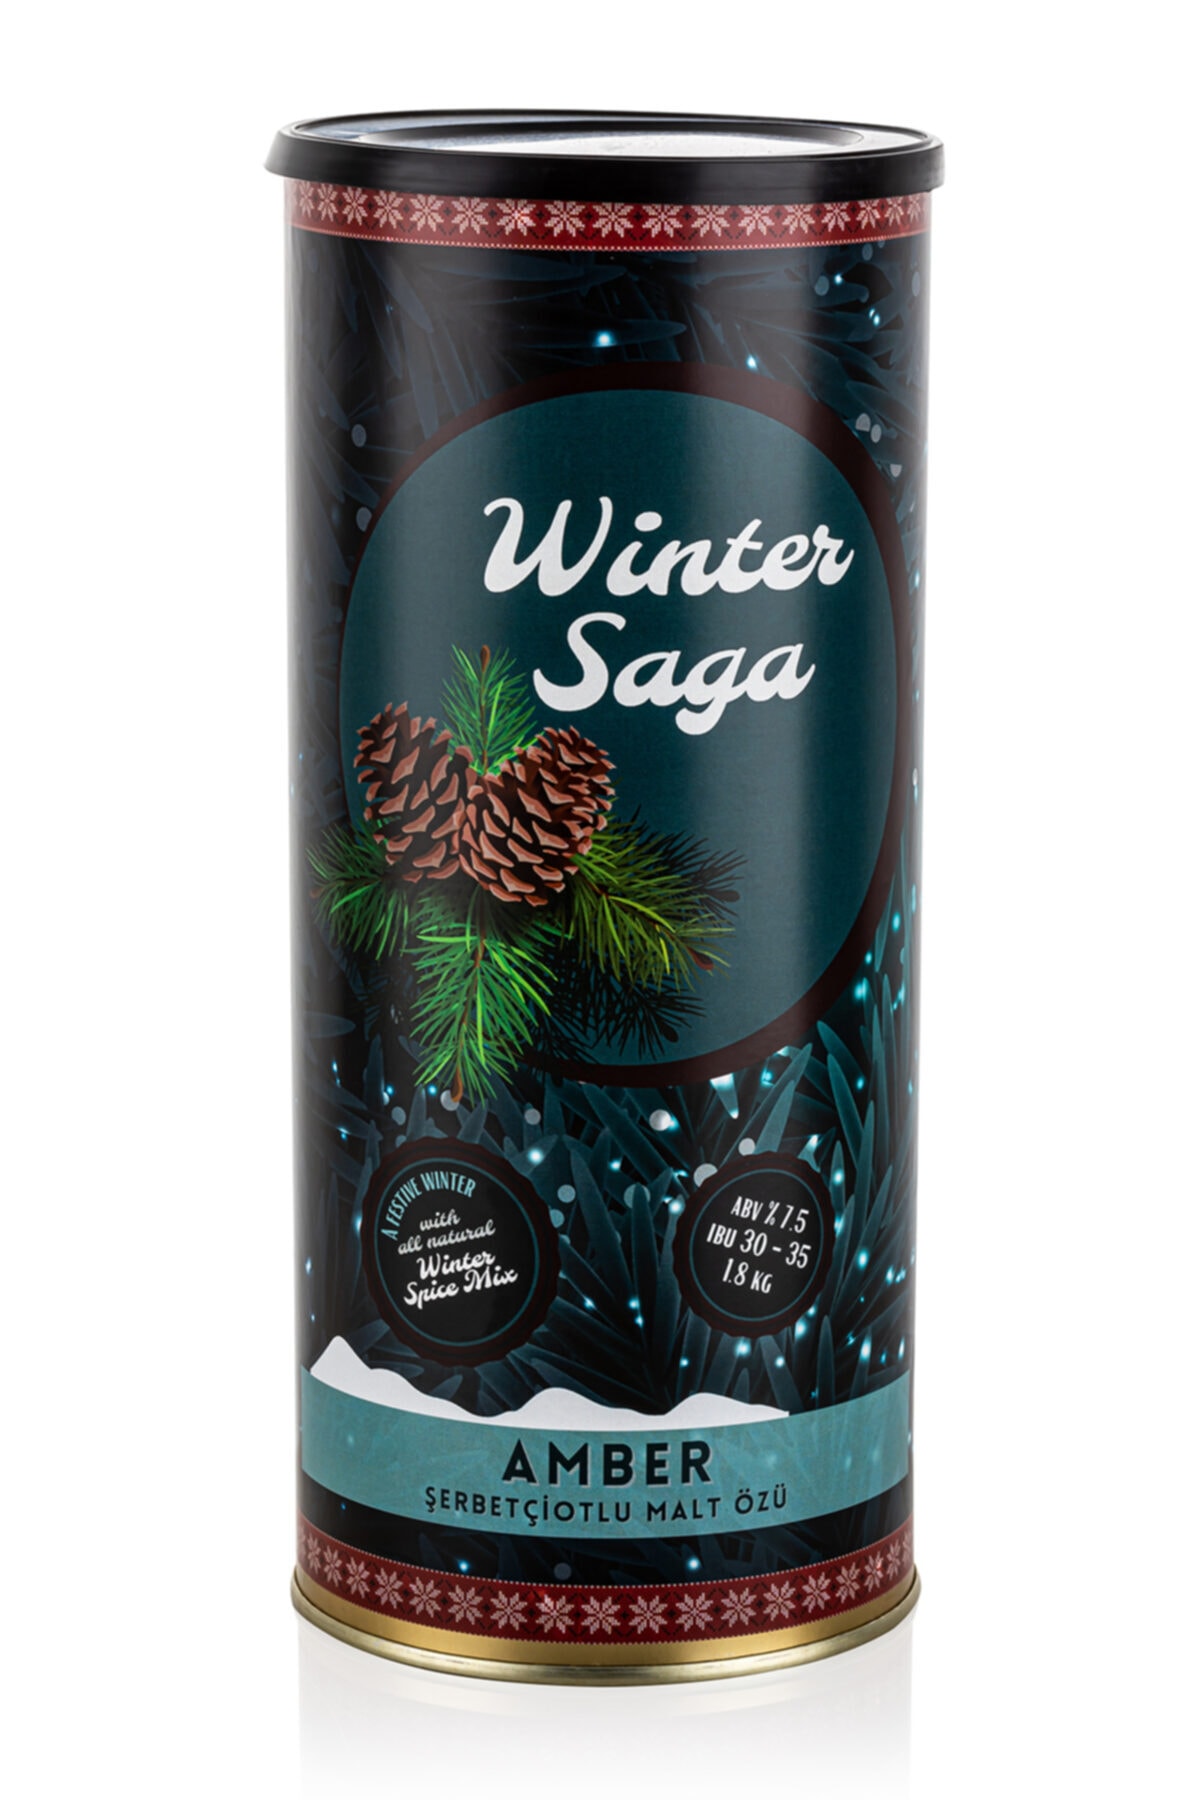 Vinomarket Winter Saga - Amber - Şerbetçiotlu Malt Özü 1.8 Kg